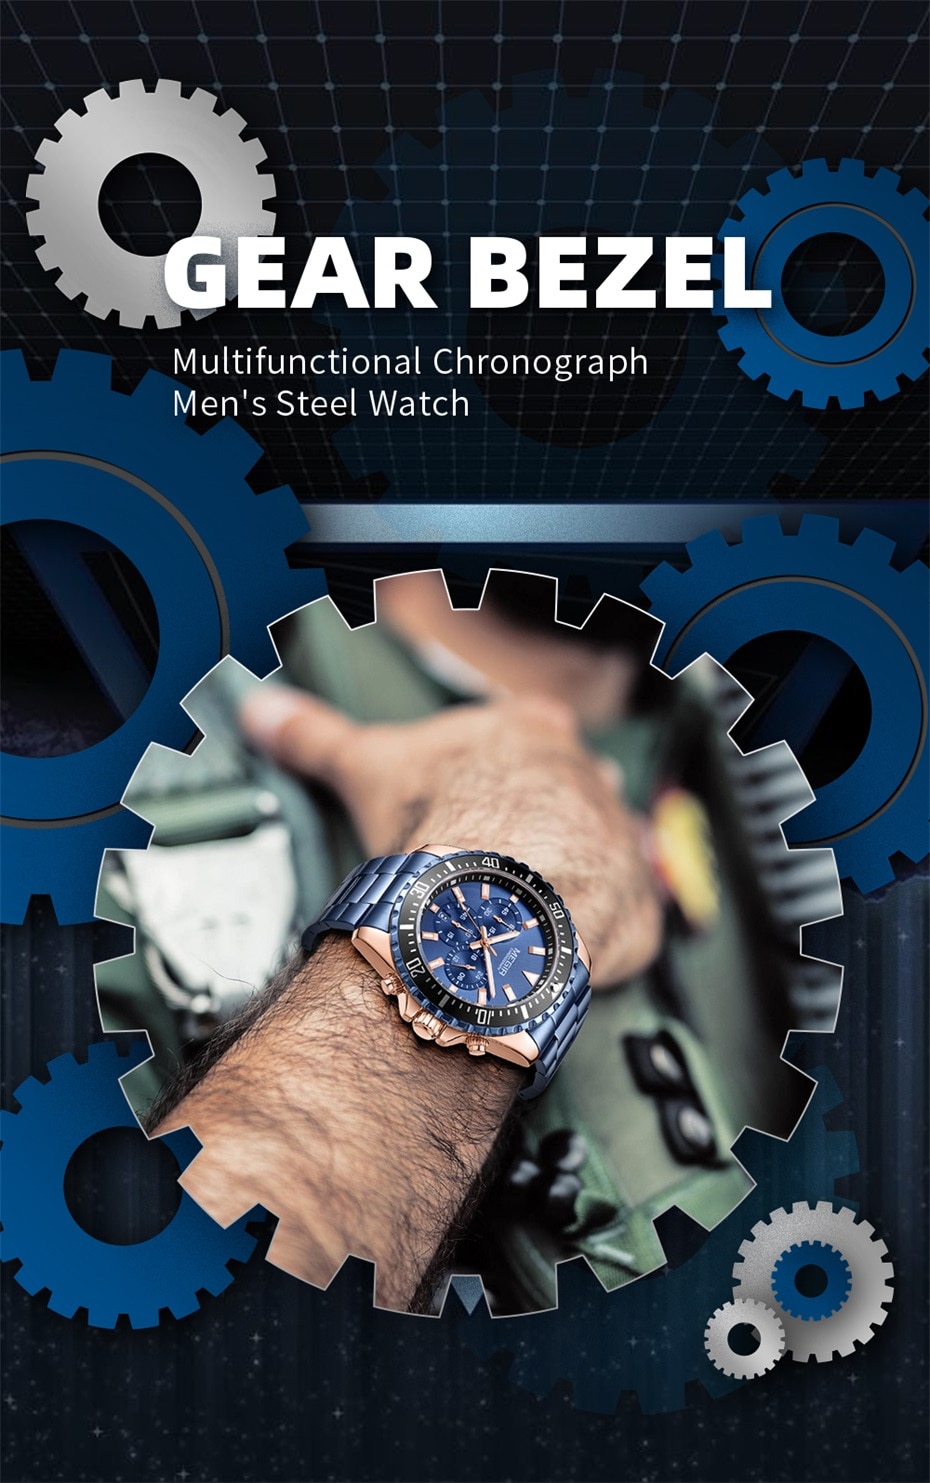 MEGIR Luxury Brand Men's Watches Blue Stainless Steel Band Business Quartz Watch Men Chronograph Army Military Wrist Watch Man